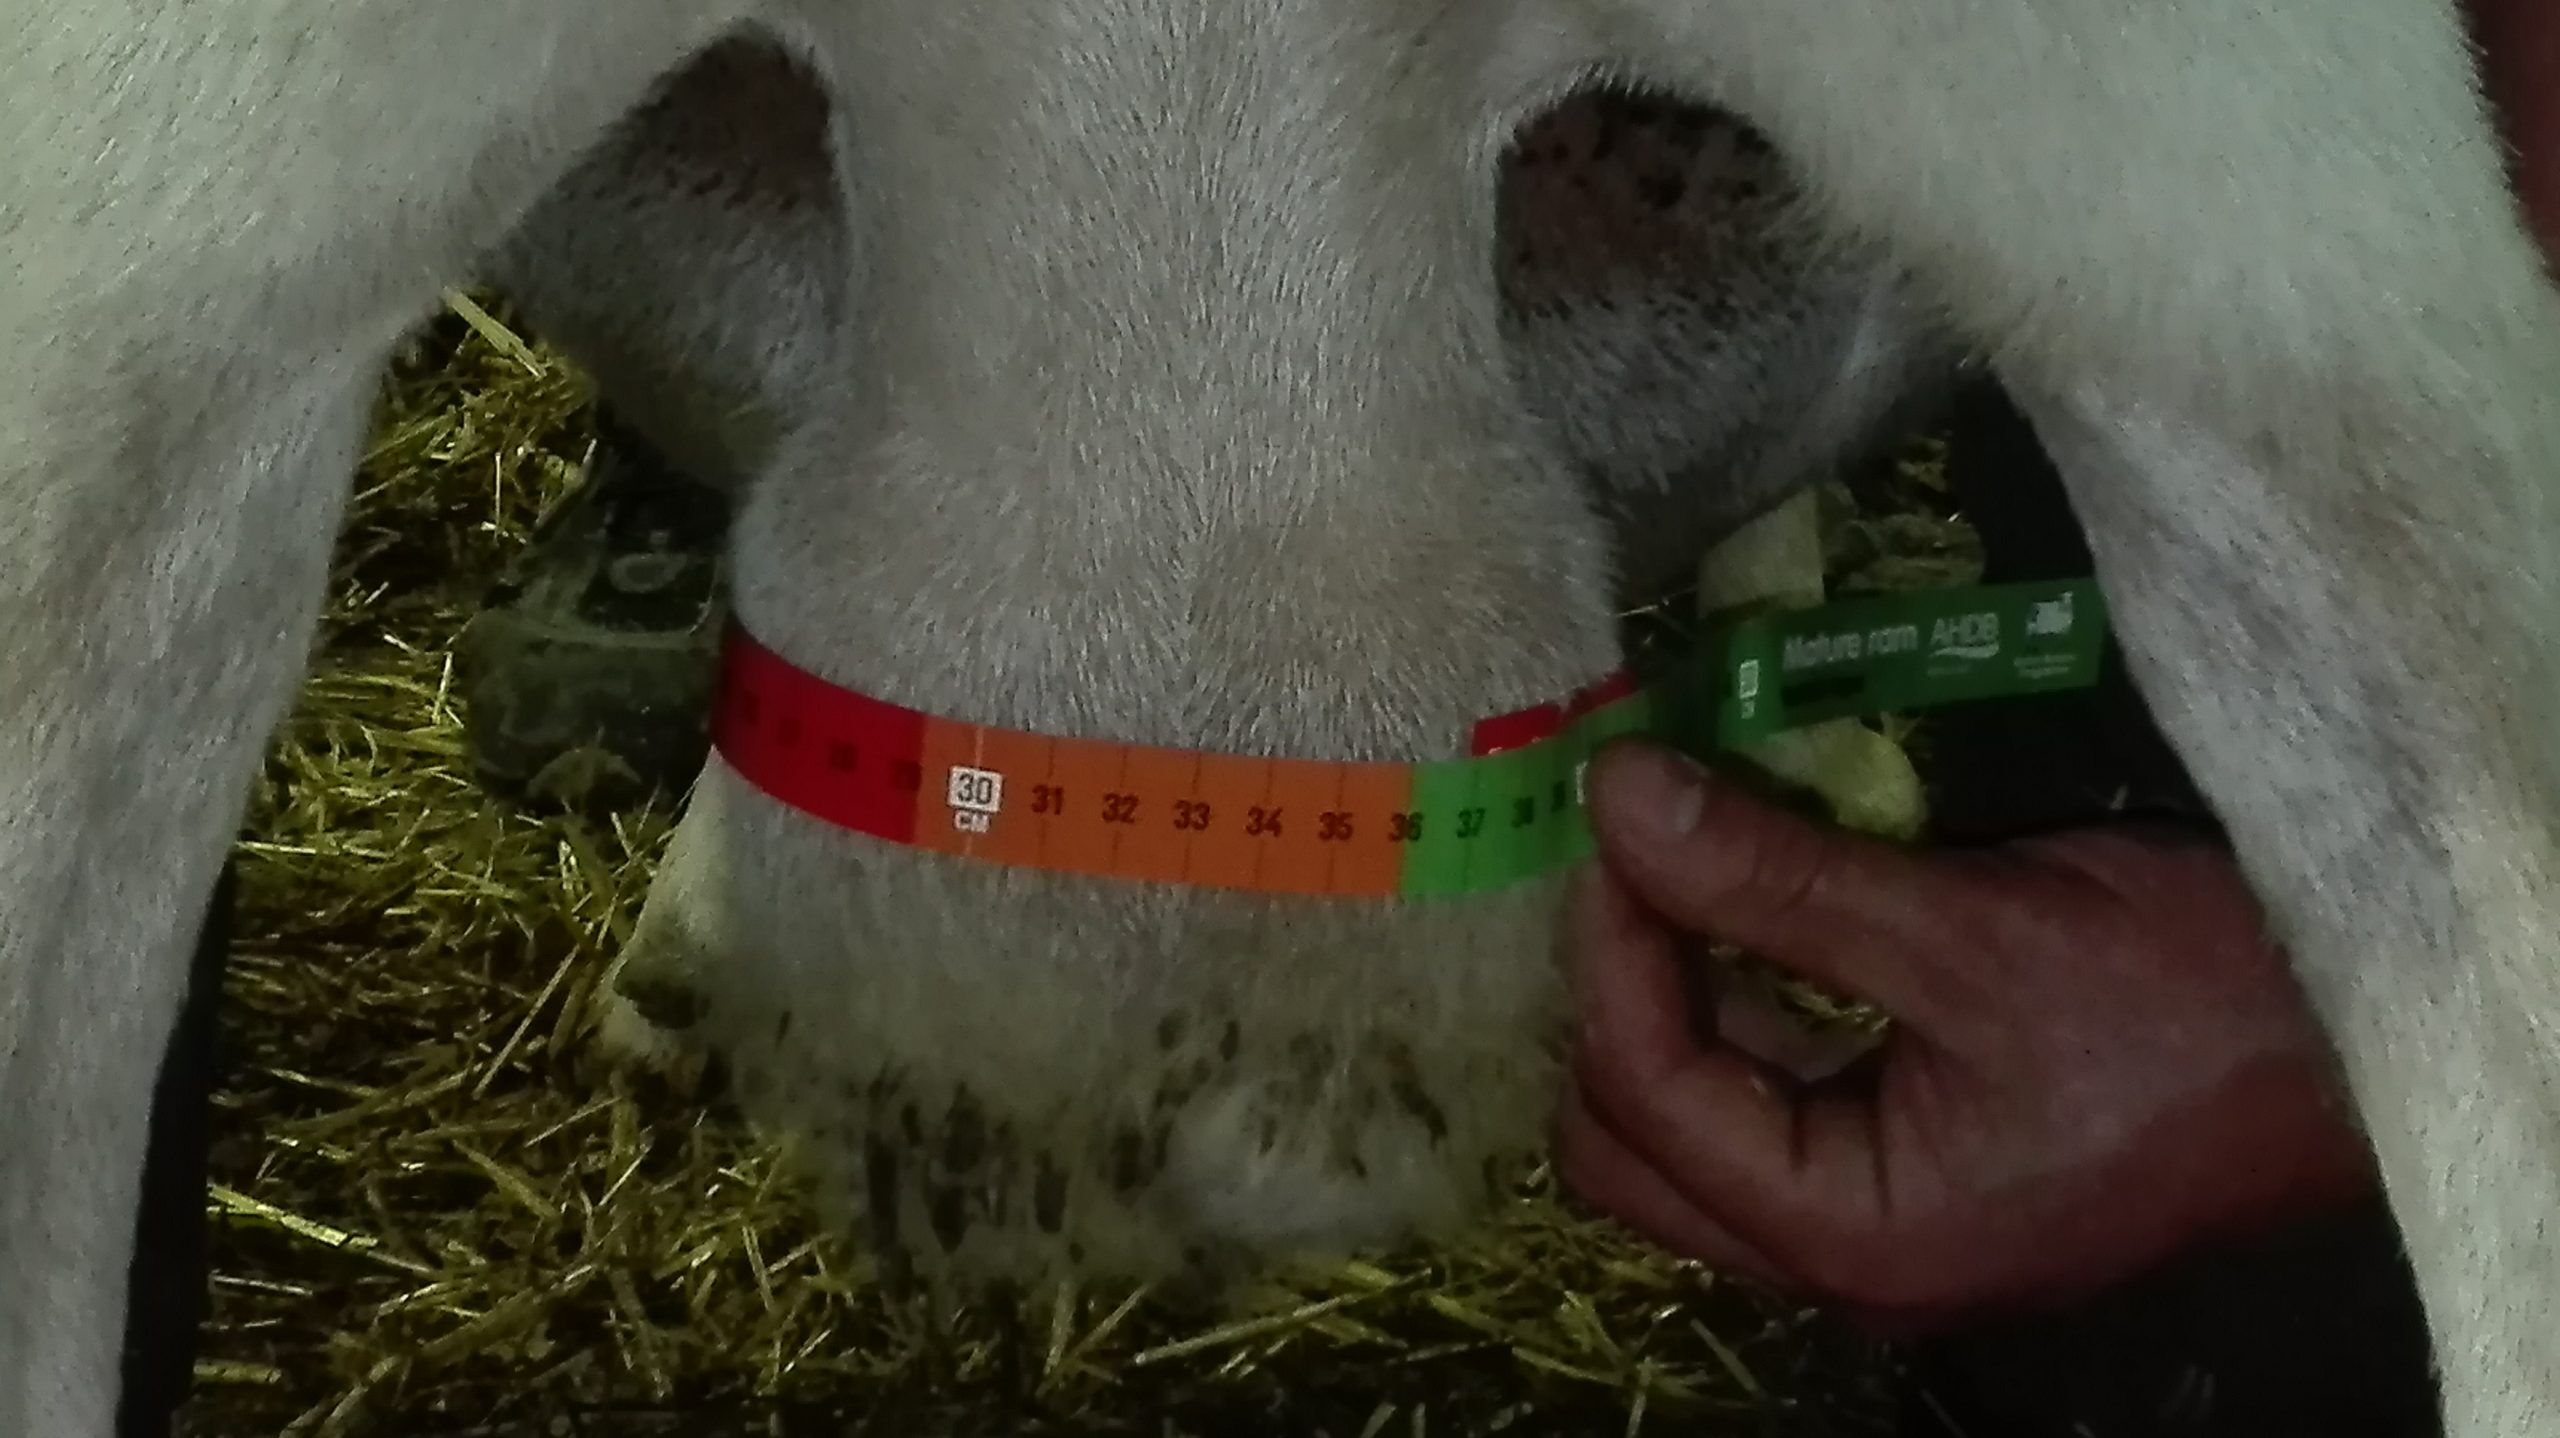 Measurint tape to assess the testicular perimeter of rams